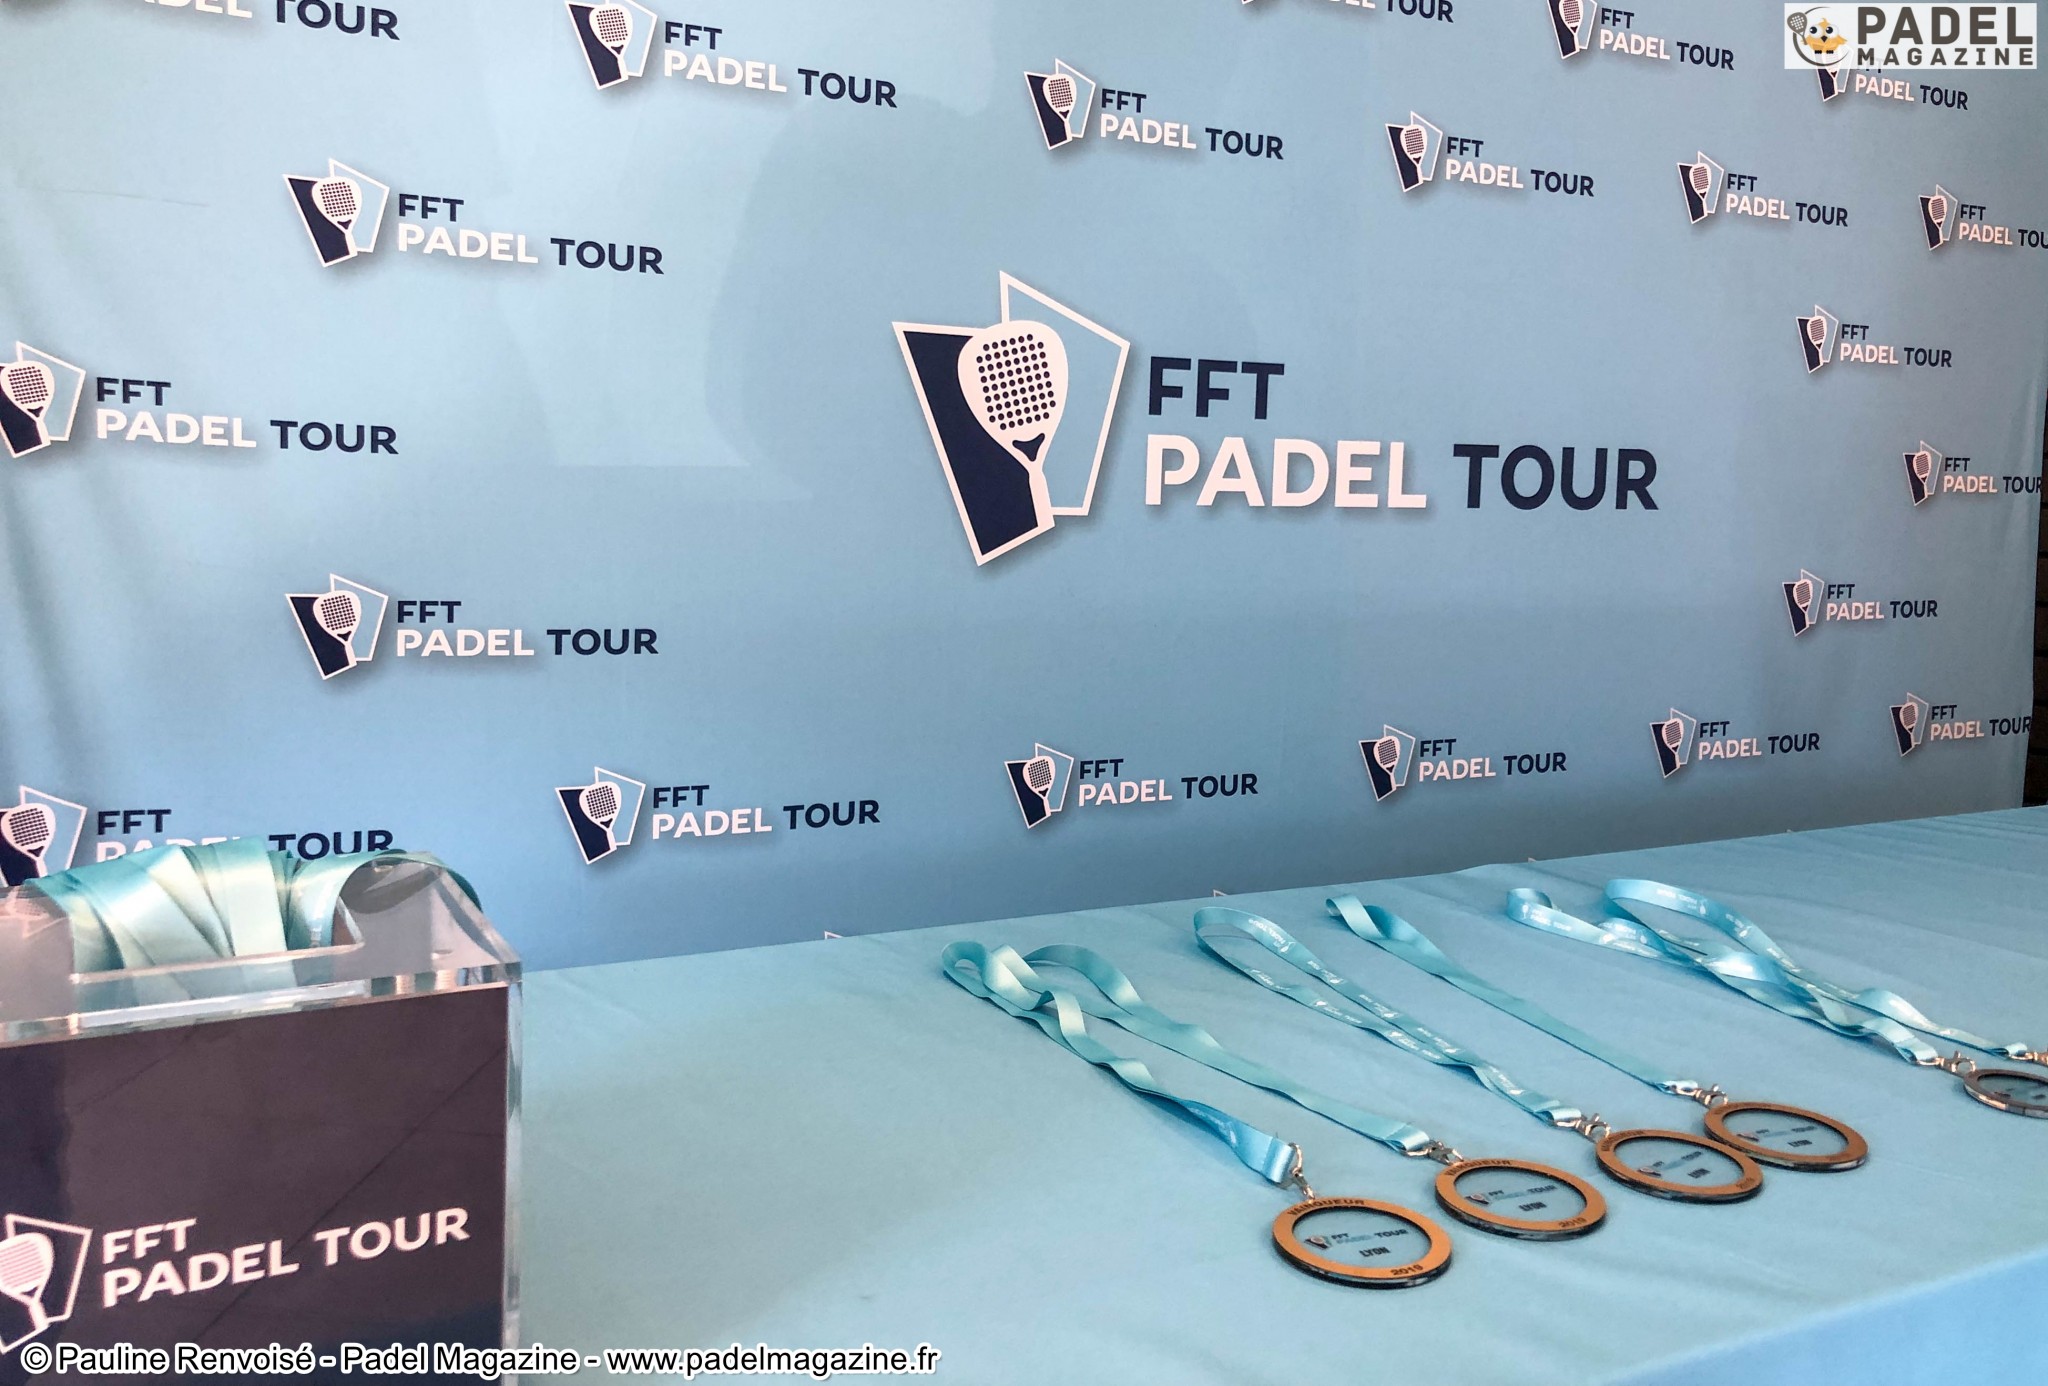 FFT Padel Tour – 1/4 – モロー / リッツ ​​vs ロペス / オーティエ – スピリット Padel リヨン